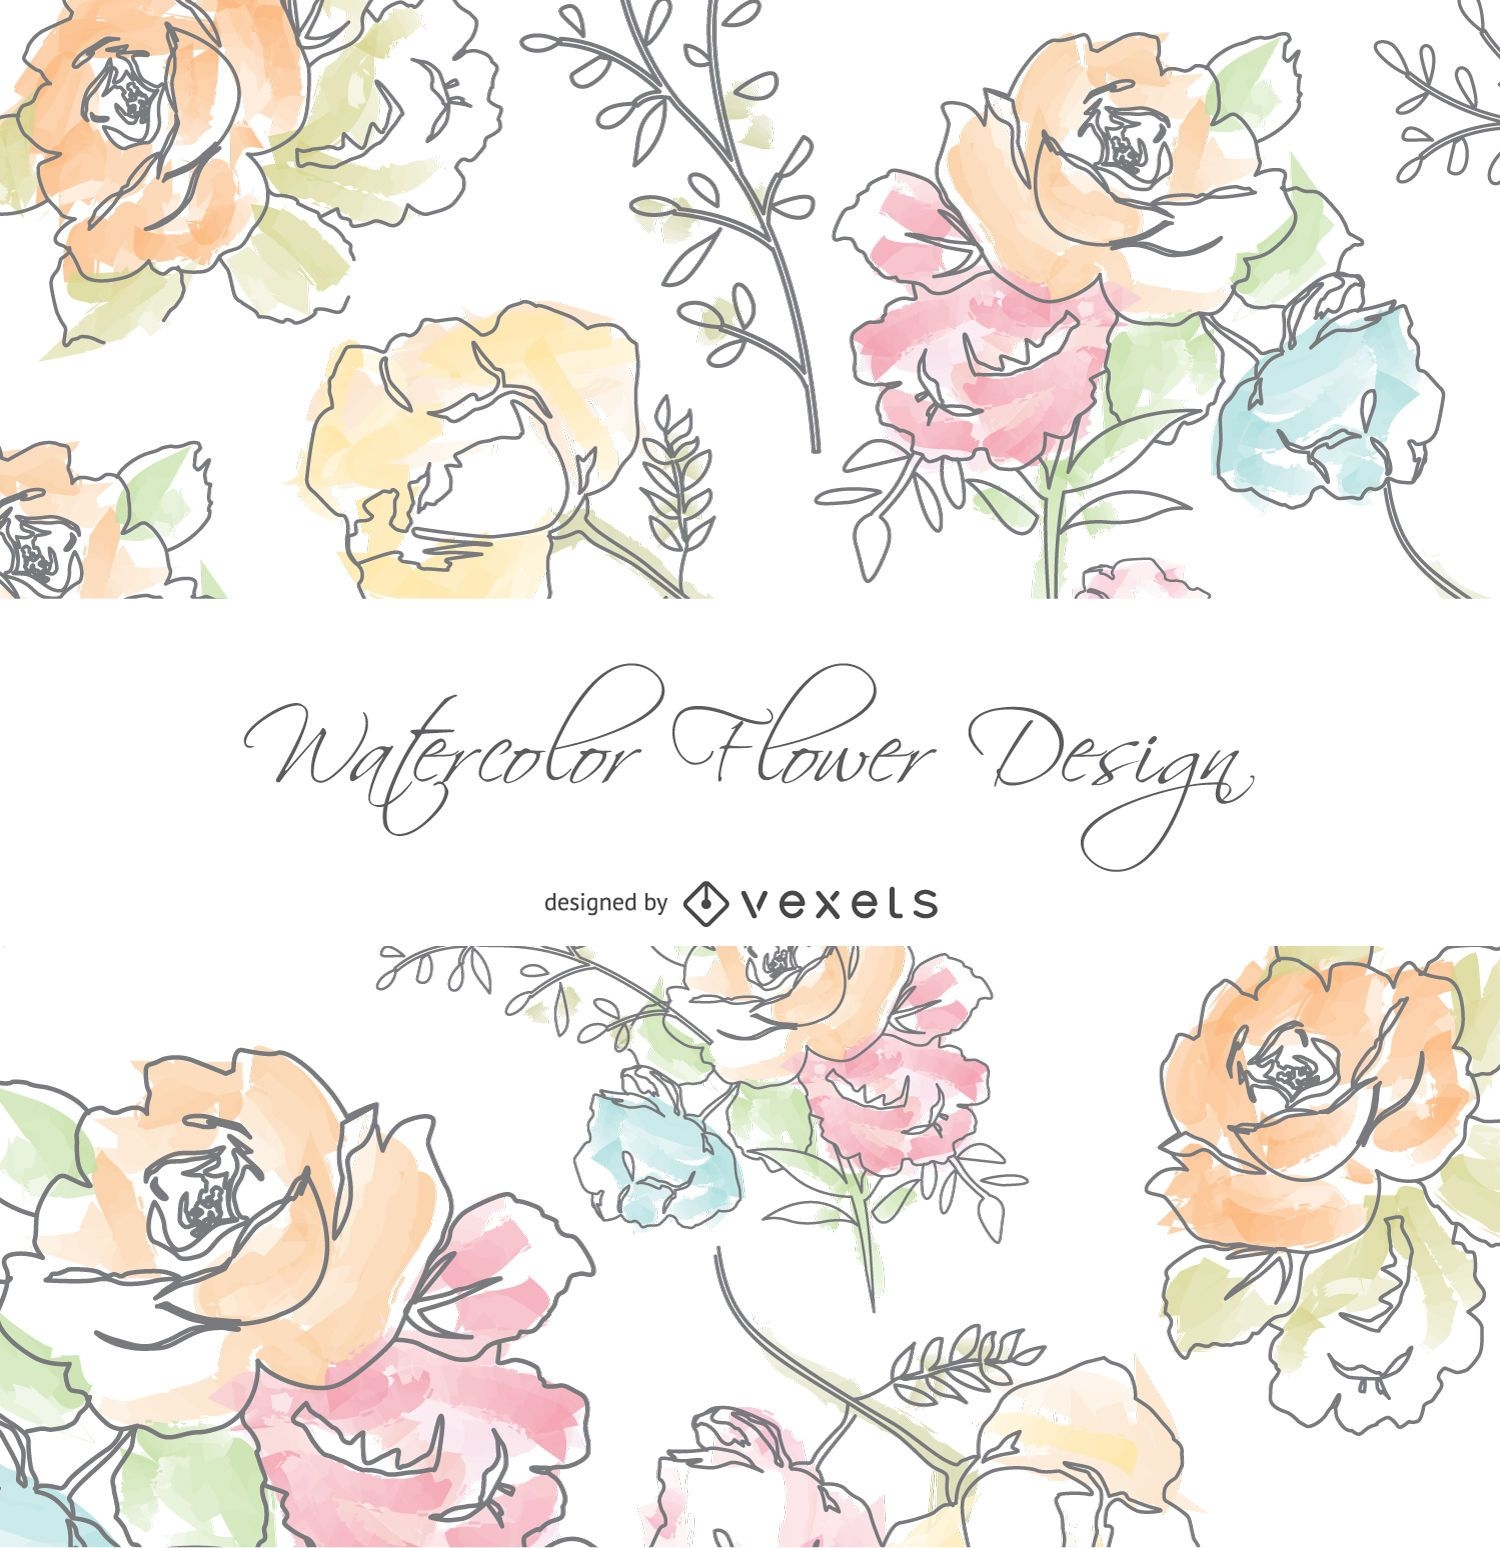 Watercolor flowers greeting card